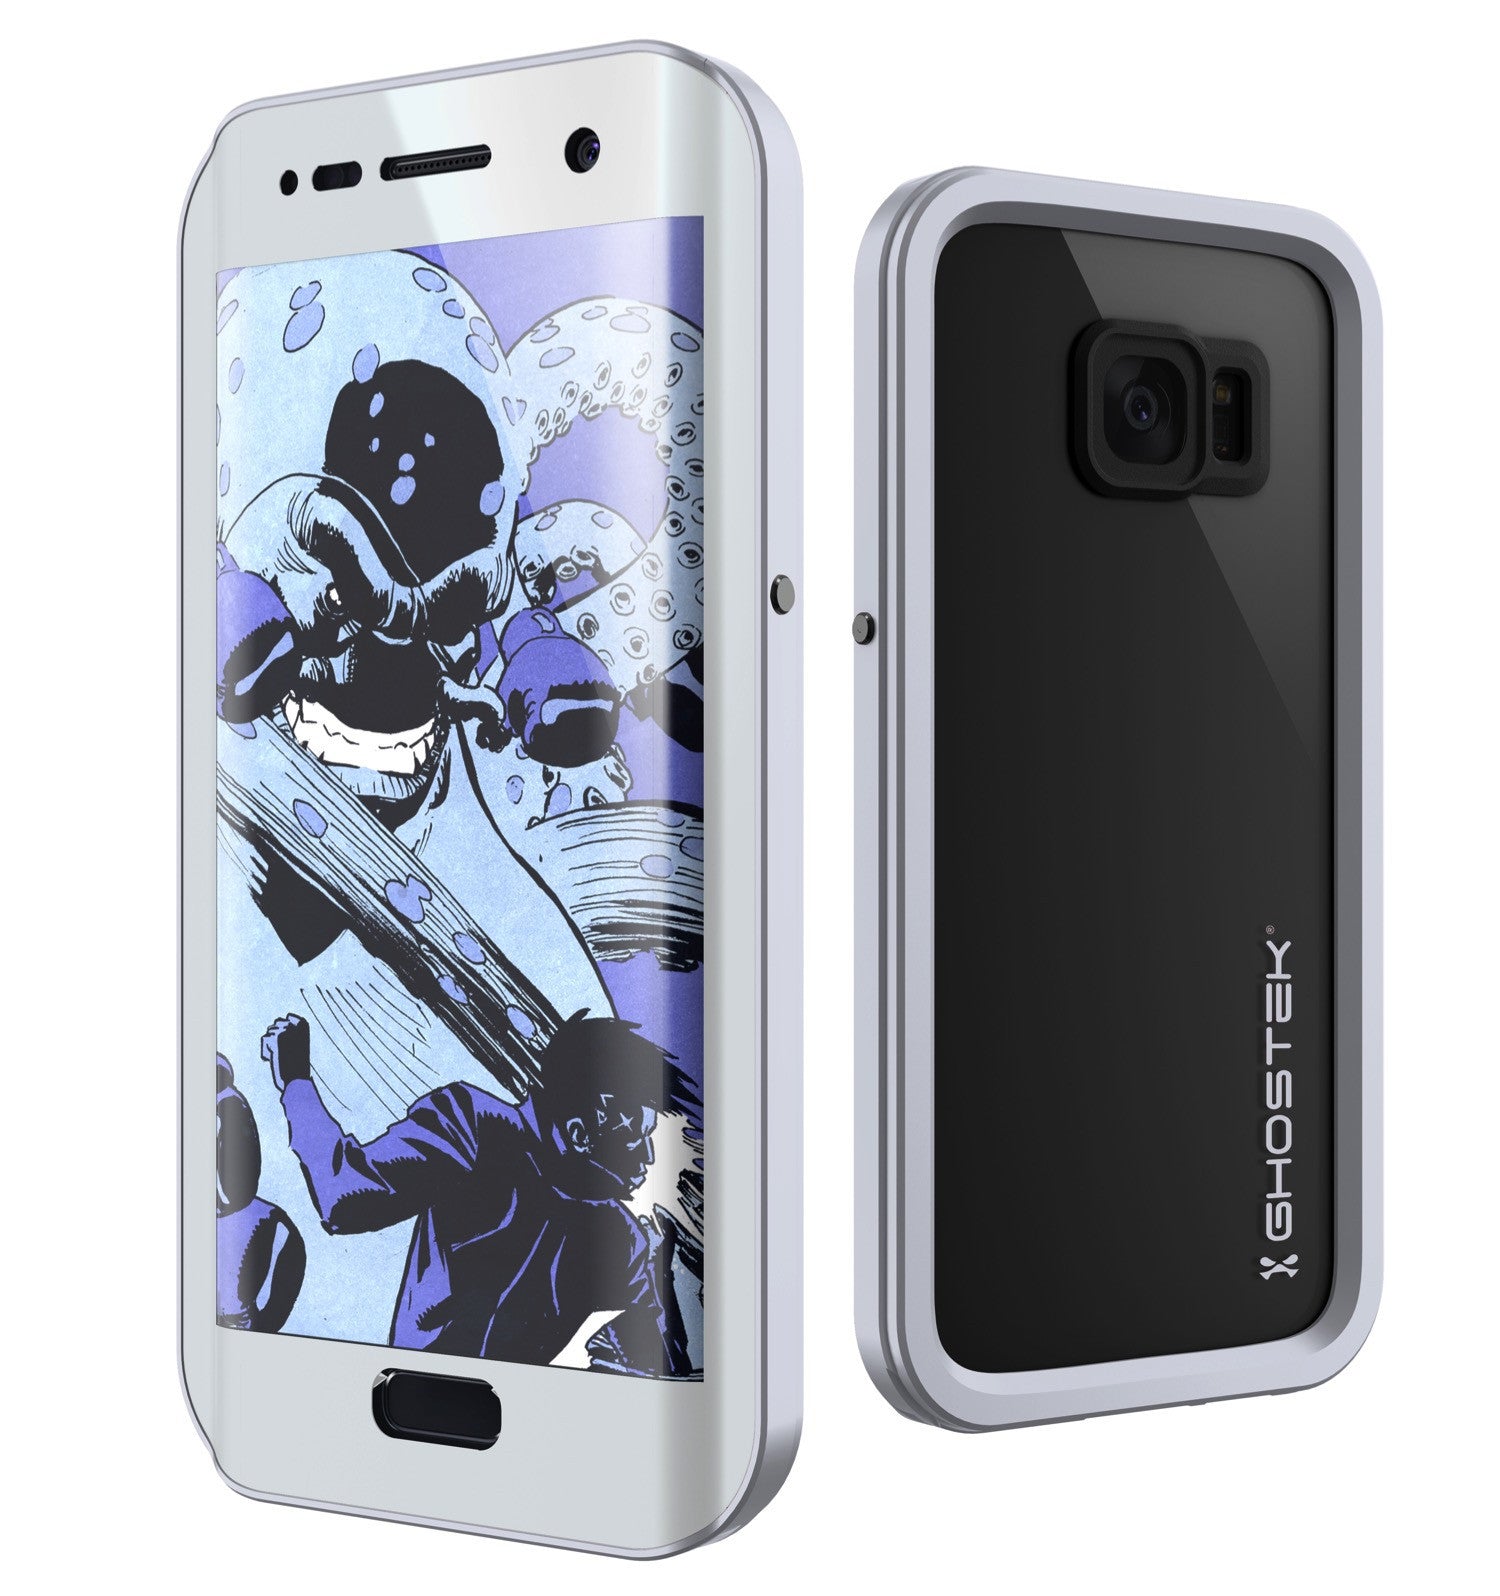 Galaxy S7 EDGE Waterproof Case, Ghostek Atomic 2.0 Silver Shock/Dirt/Snow Proof | Lifetime Warranty (Color in image: Silver)